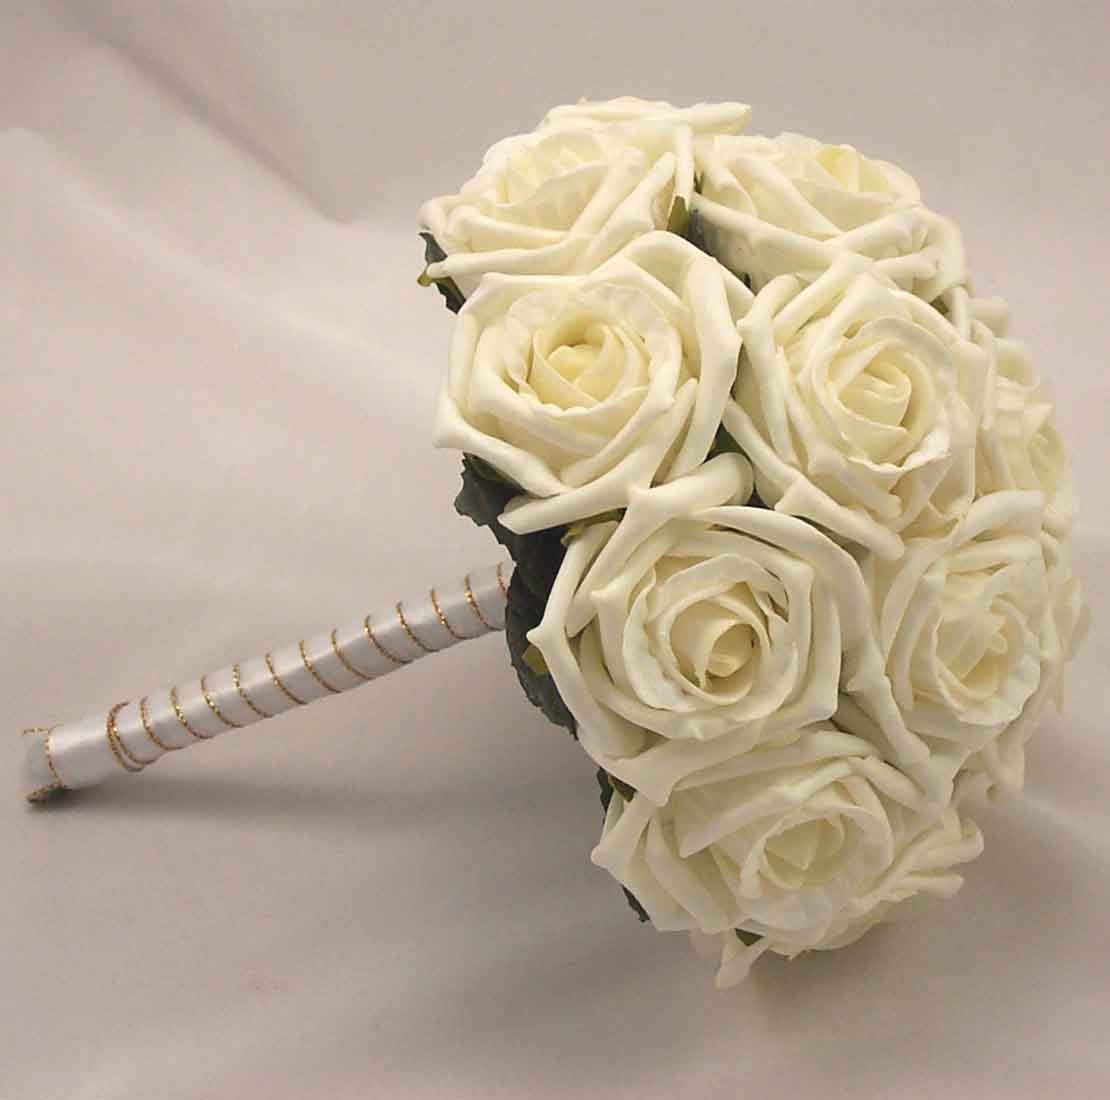 Ivory Rose Bridesmaid's Bouquet